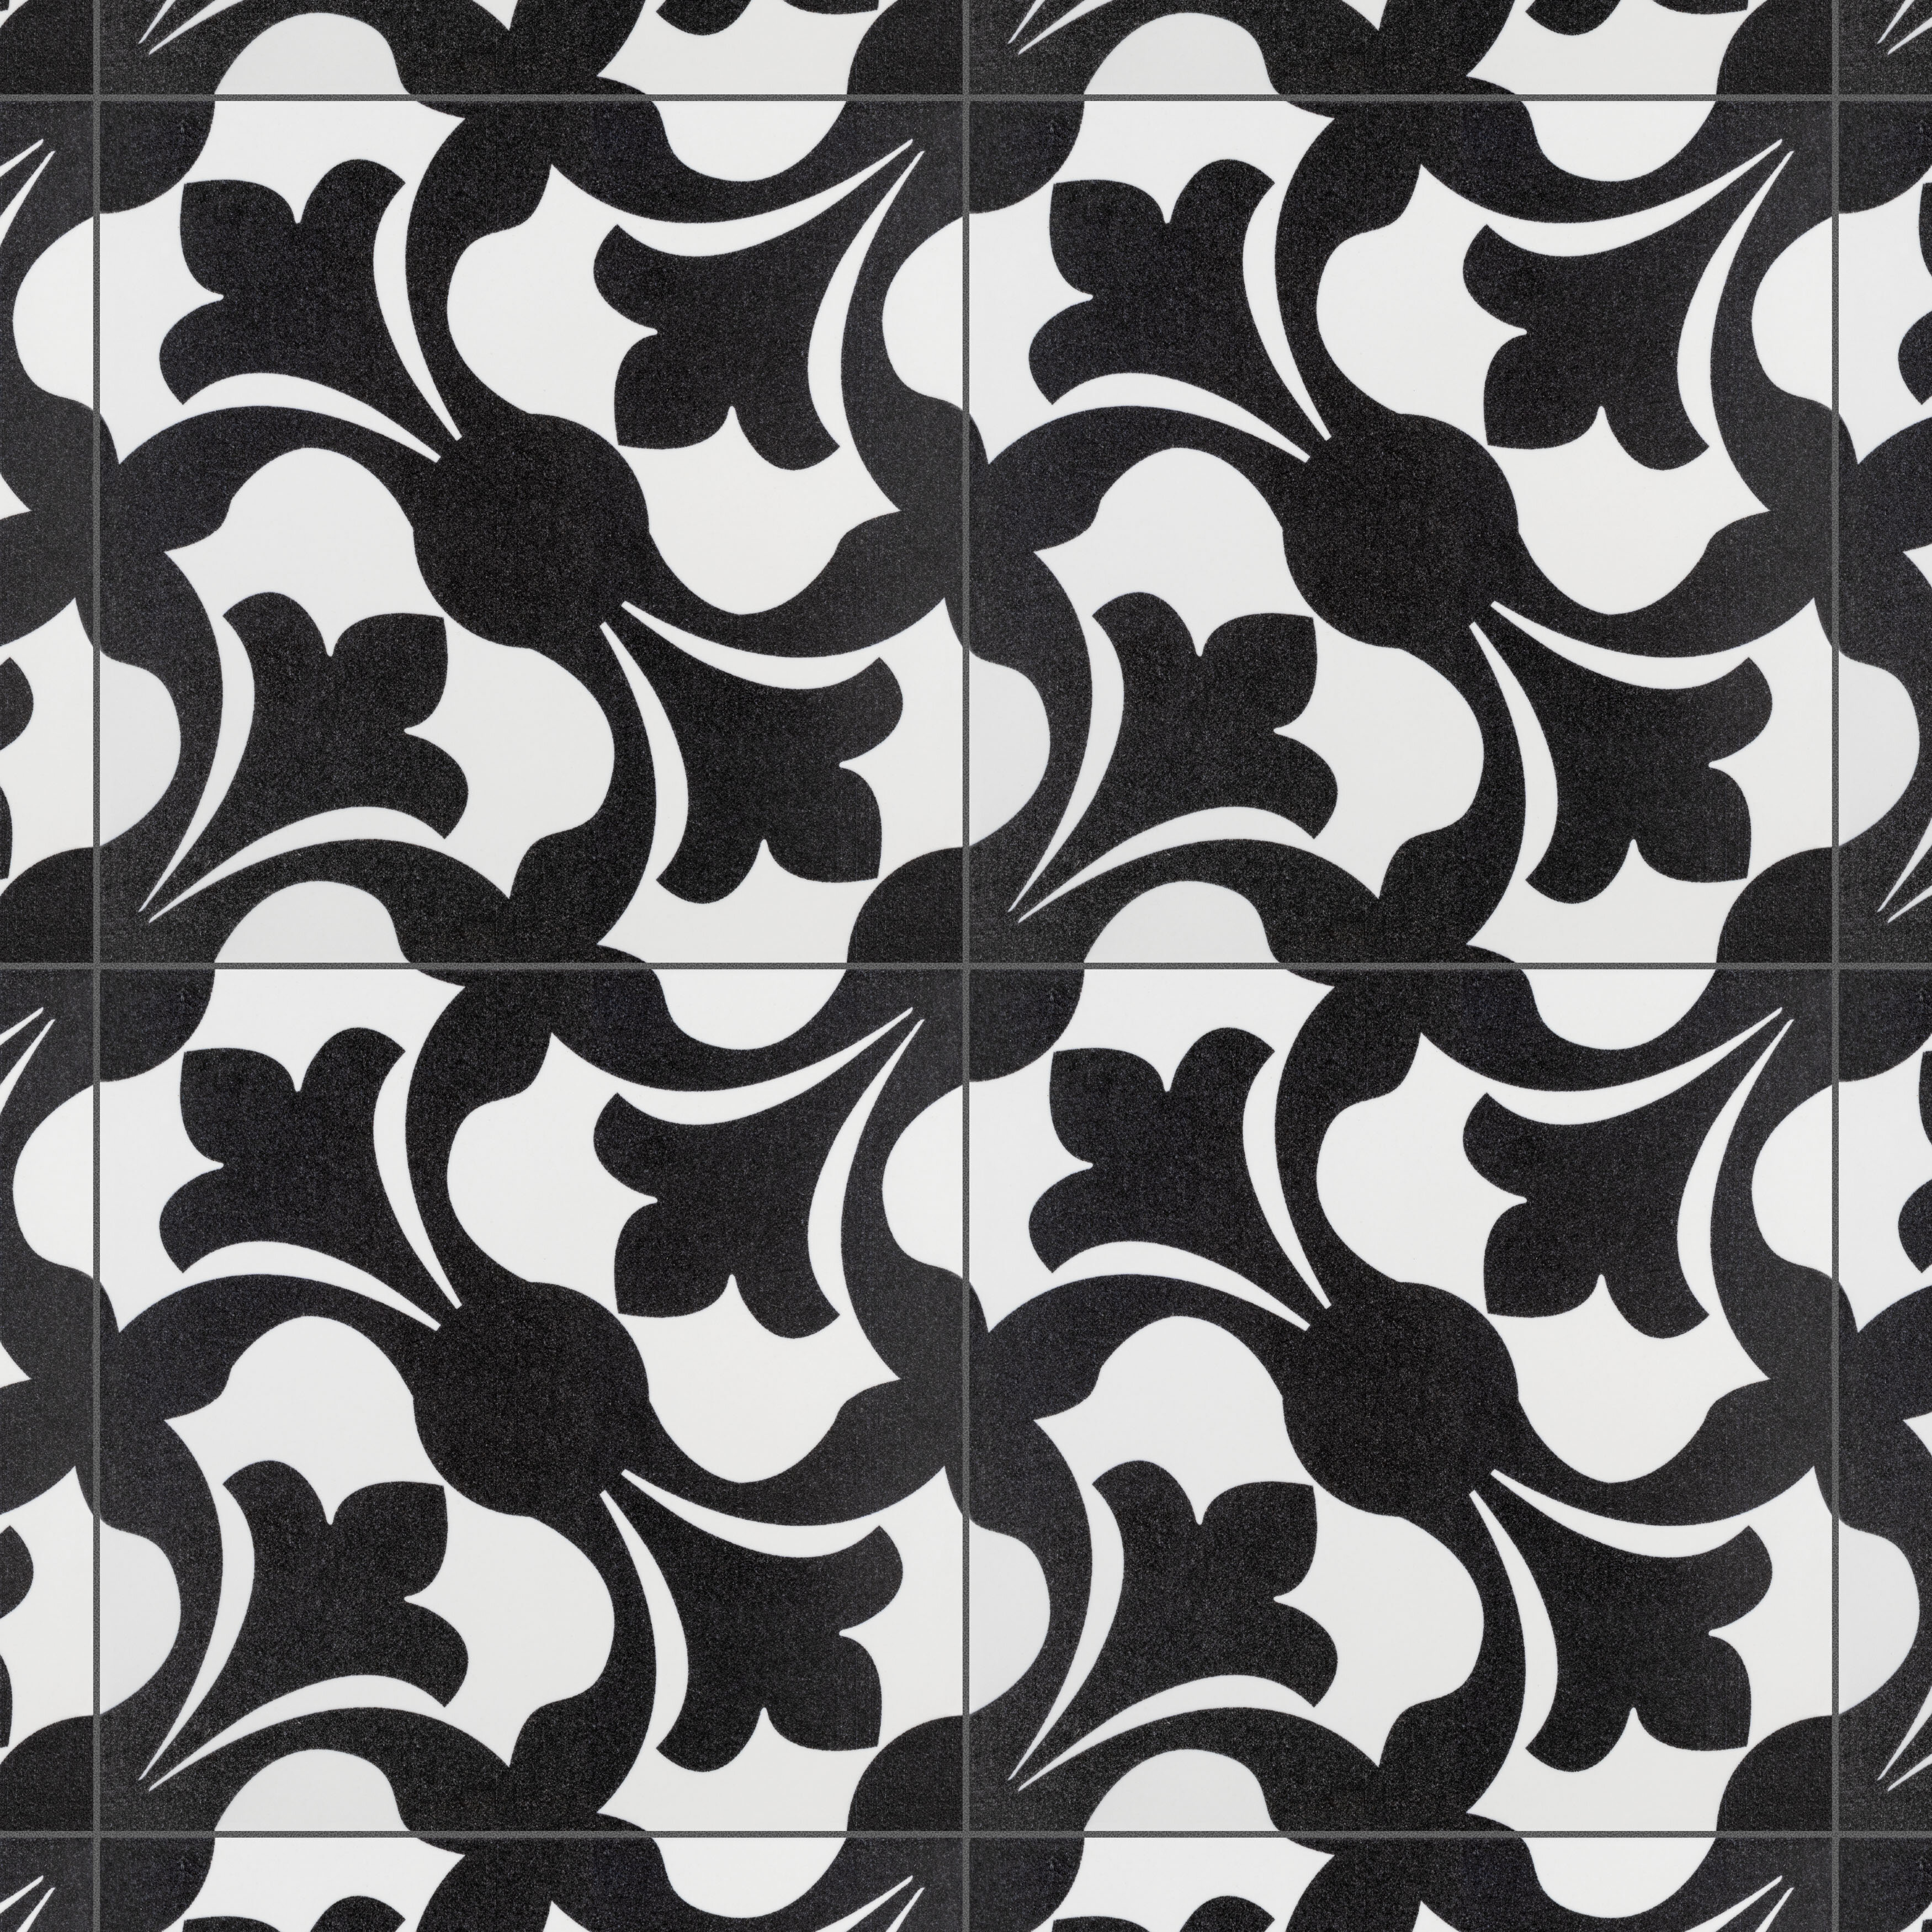 Elitetile Sentiment 8 X 8 Ceramic Spanish Wall Floor Tile Reviews Wayfairca